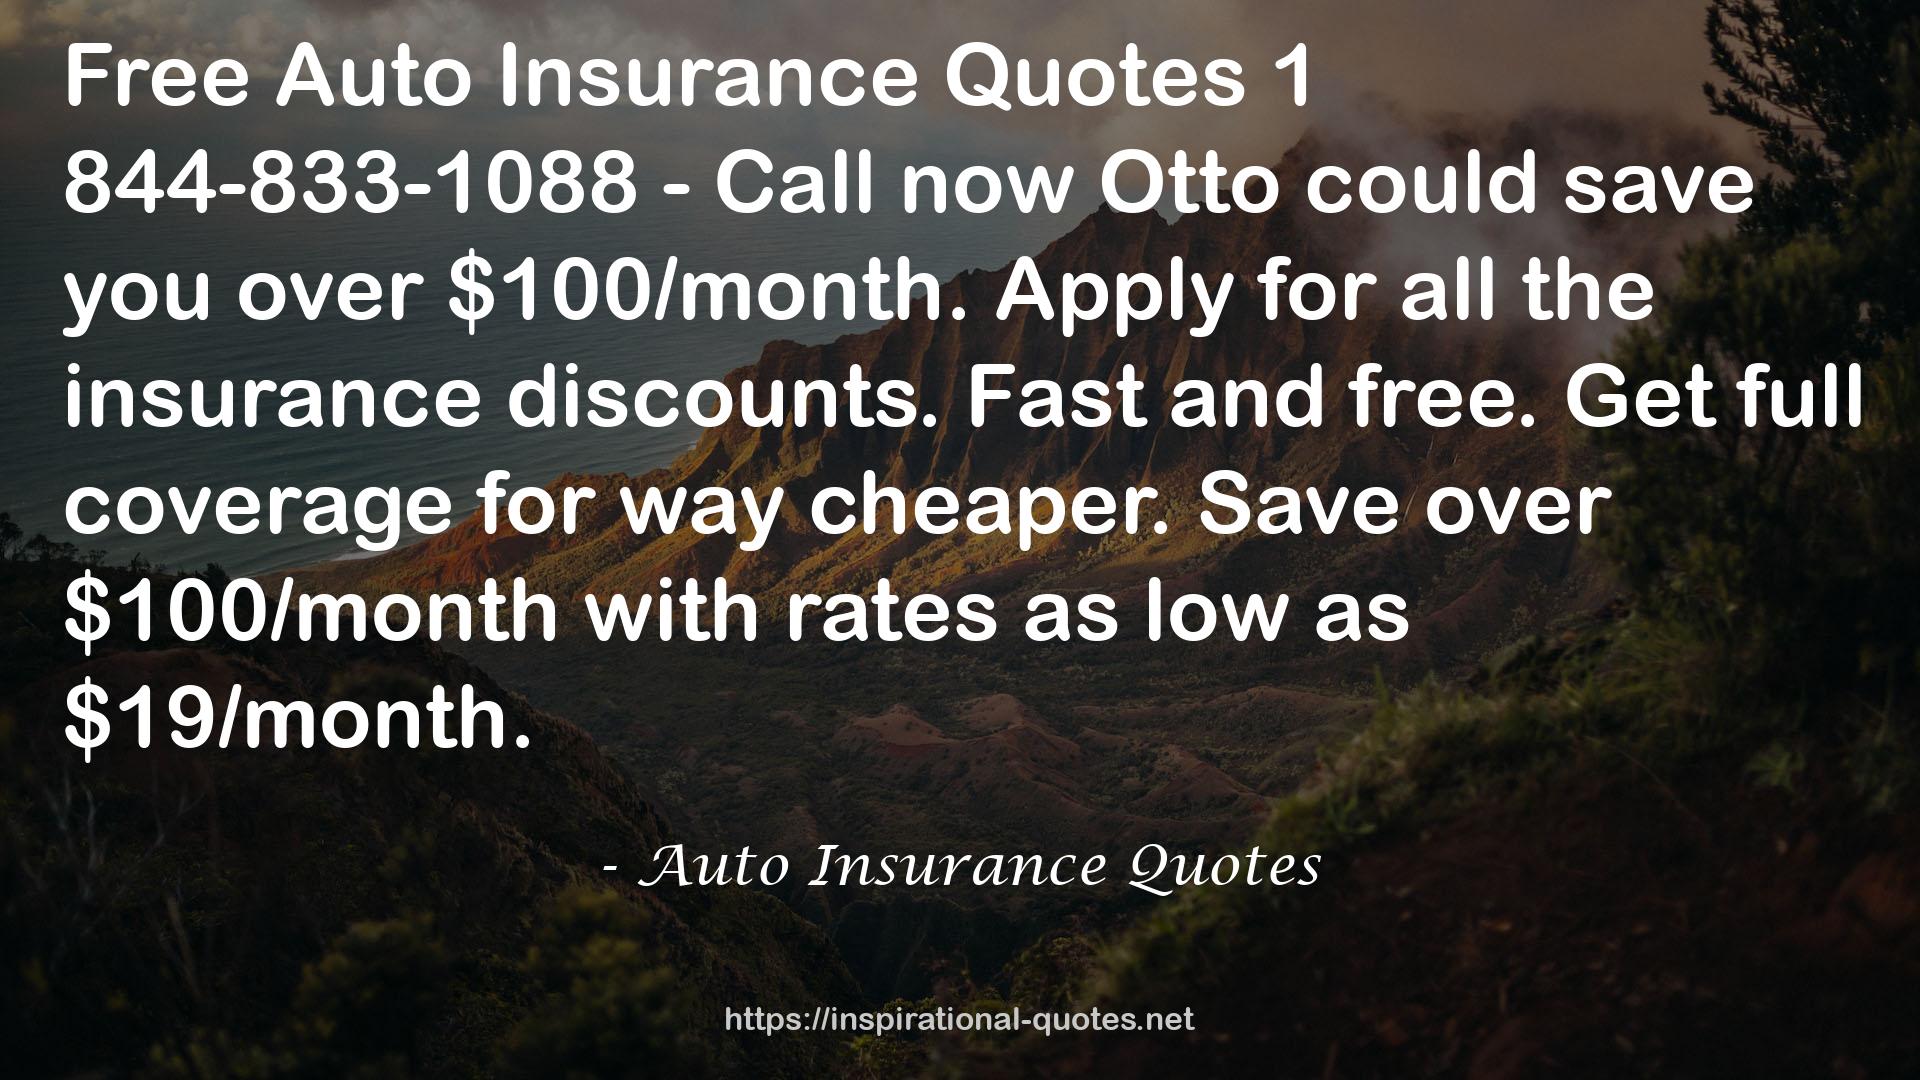 Auto Insurance Quotes QUOTES